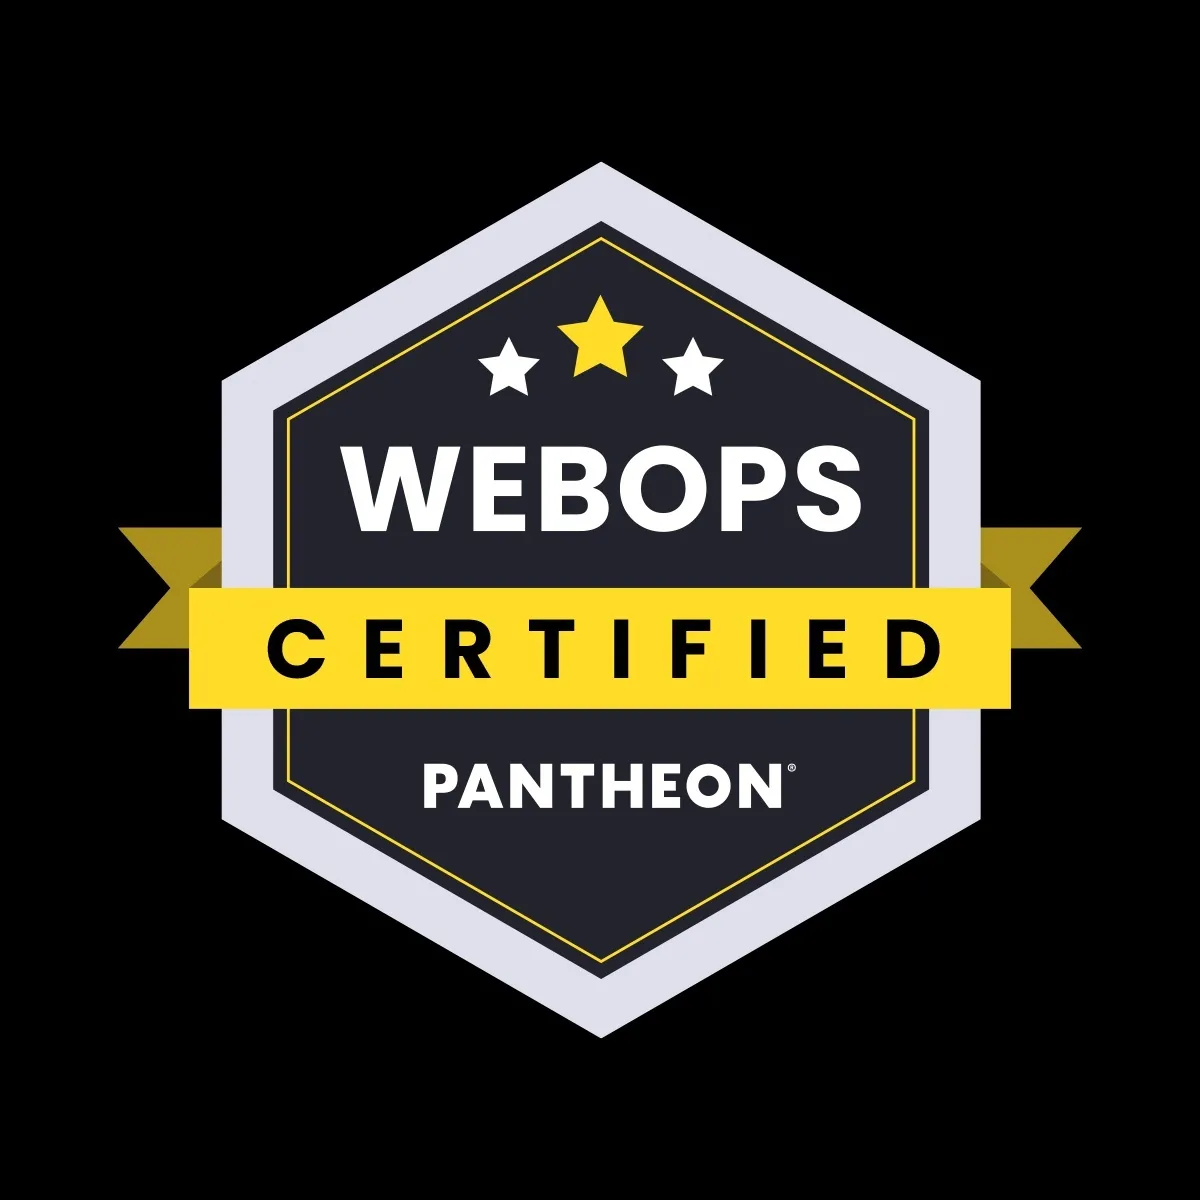 Web Ops Certification